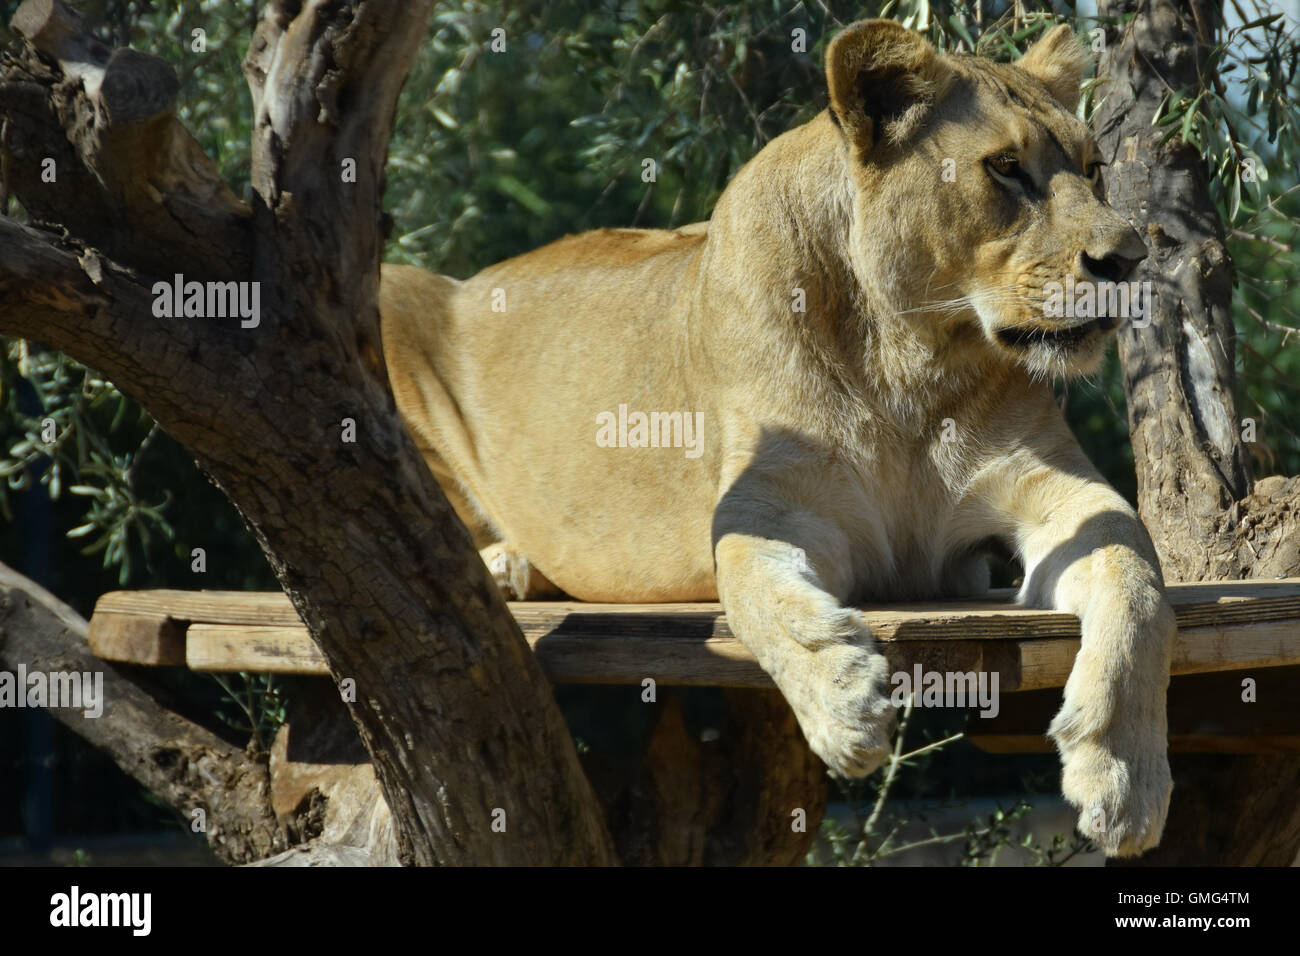 African lioness resting on wooden platform. Wild animal. Stock Photo